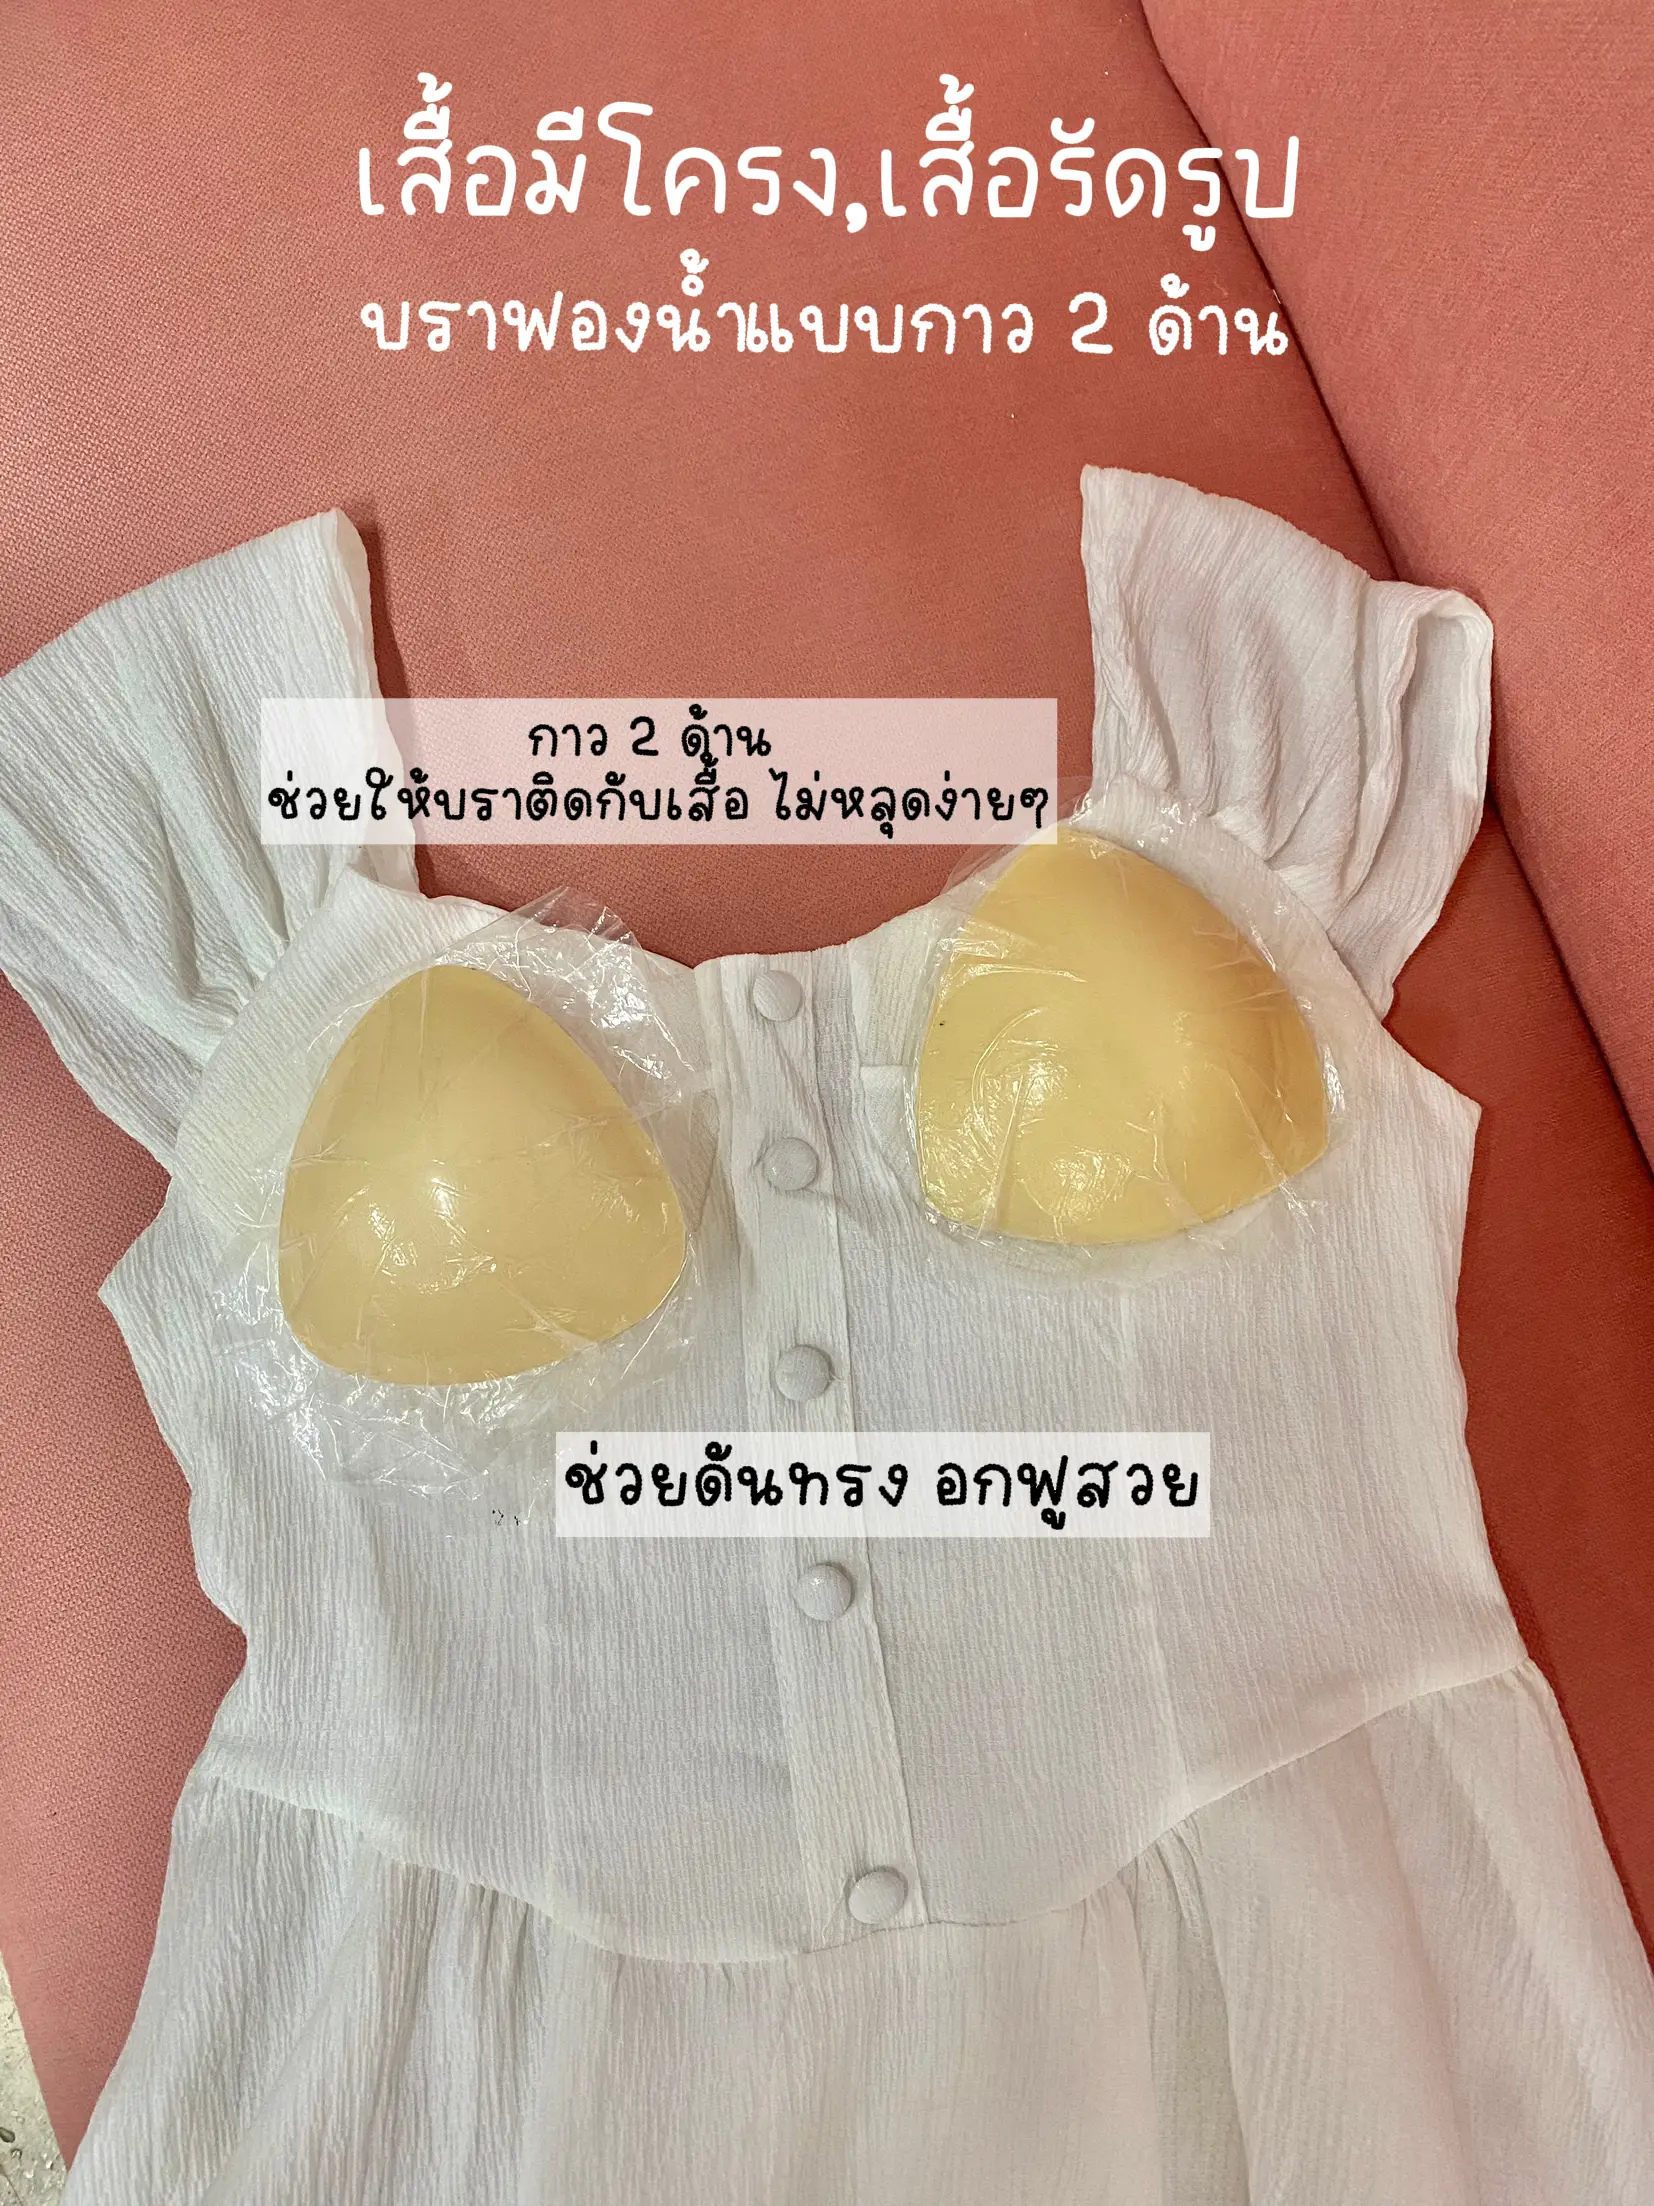 FASHION FORMS Nubra® self-adhesive backless strapless bra